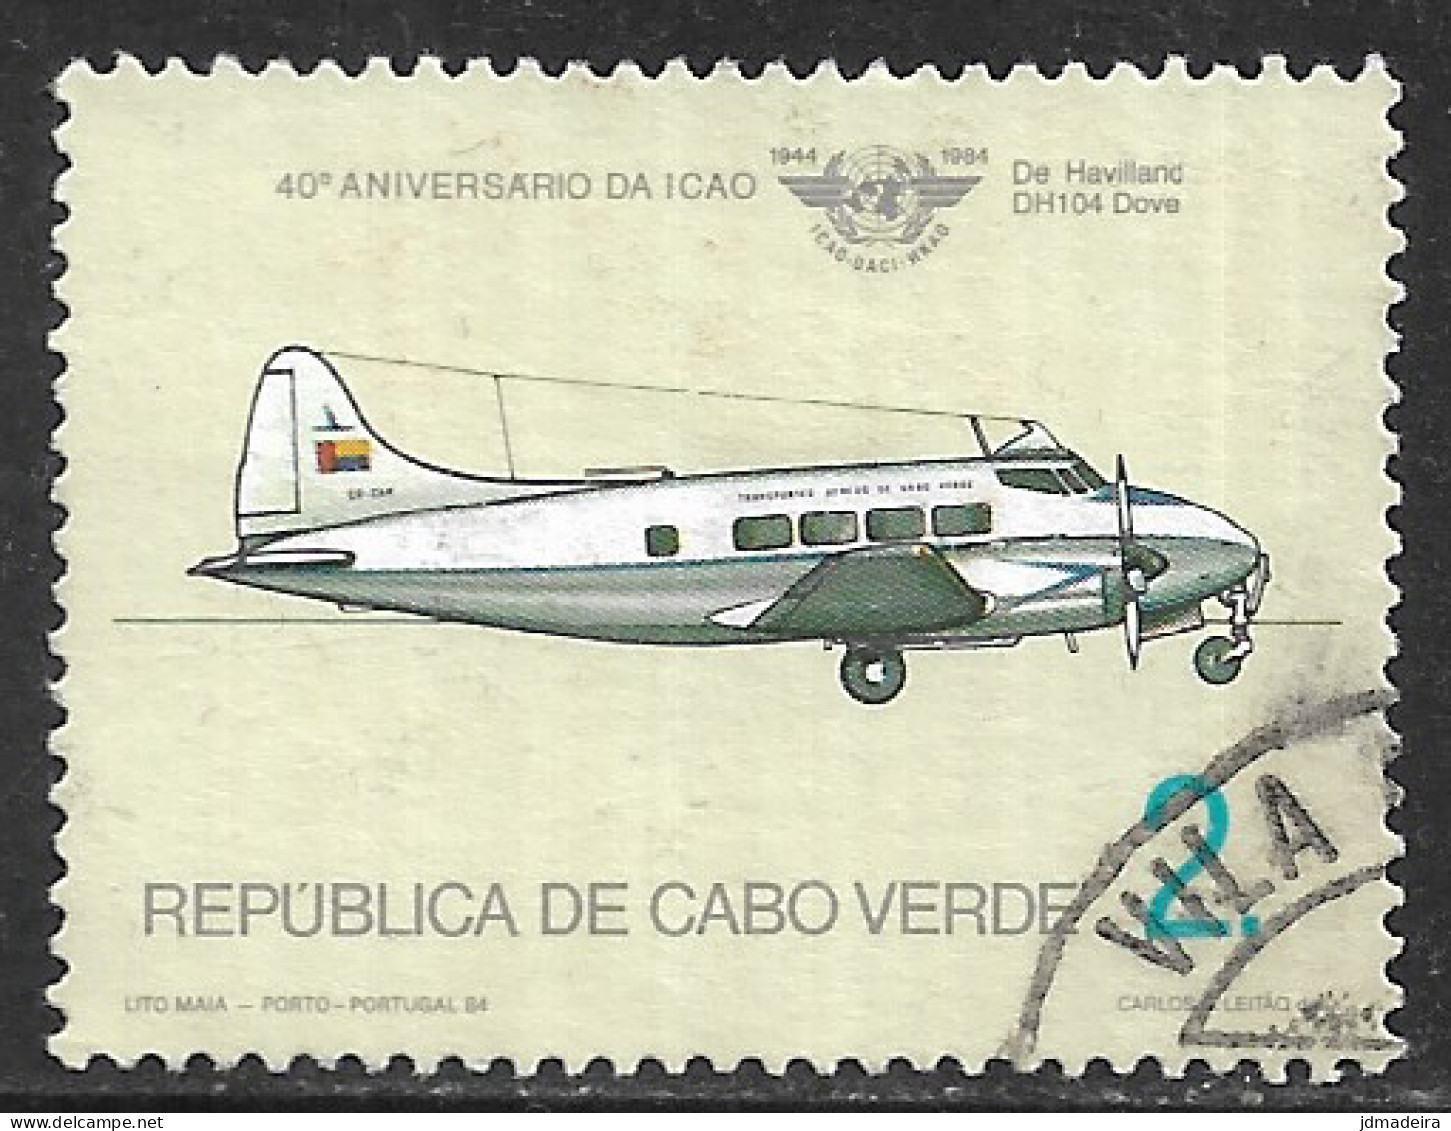 Cabo Verde – 1984 Civil Aviation Organization Anniversary 2. Used Stamp - Cap Vert